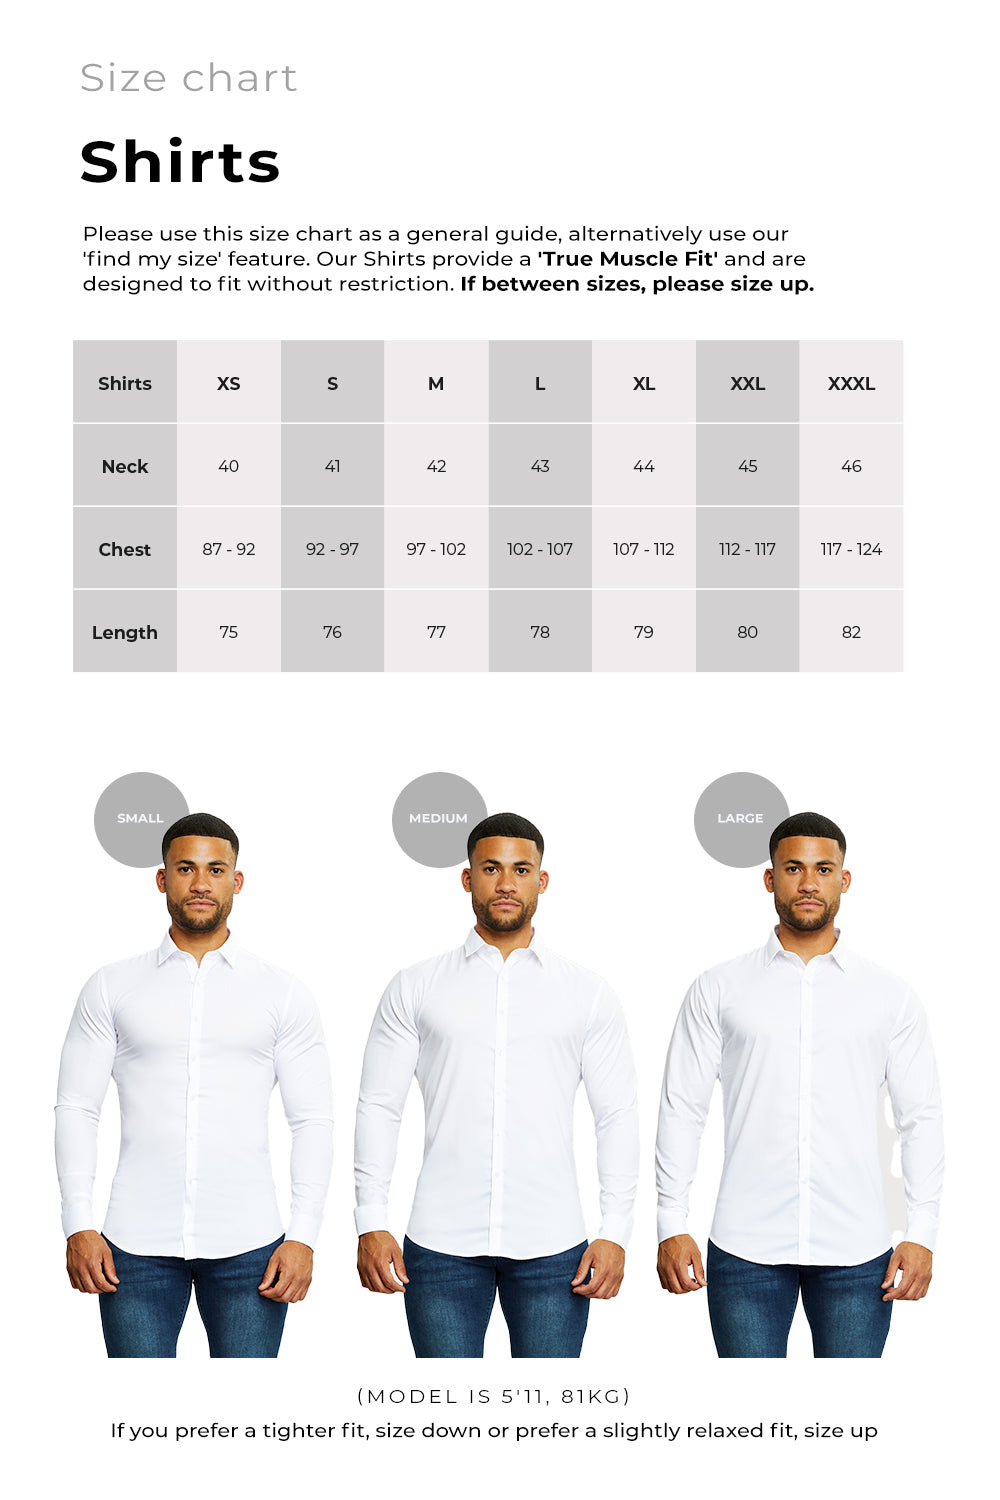 Men's T-Shirt Fit Guide  Muscle Fit vs Slim Fit vs Regular Fit 